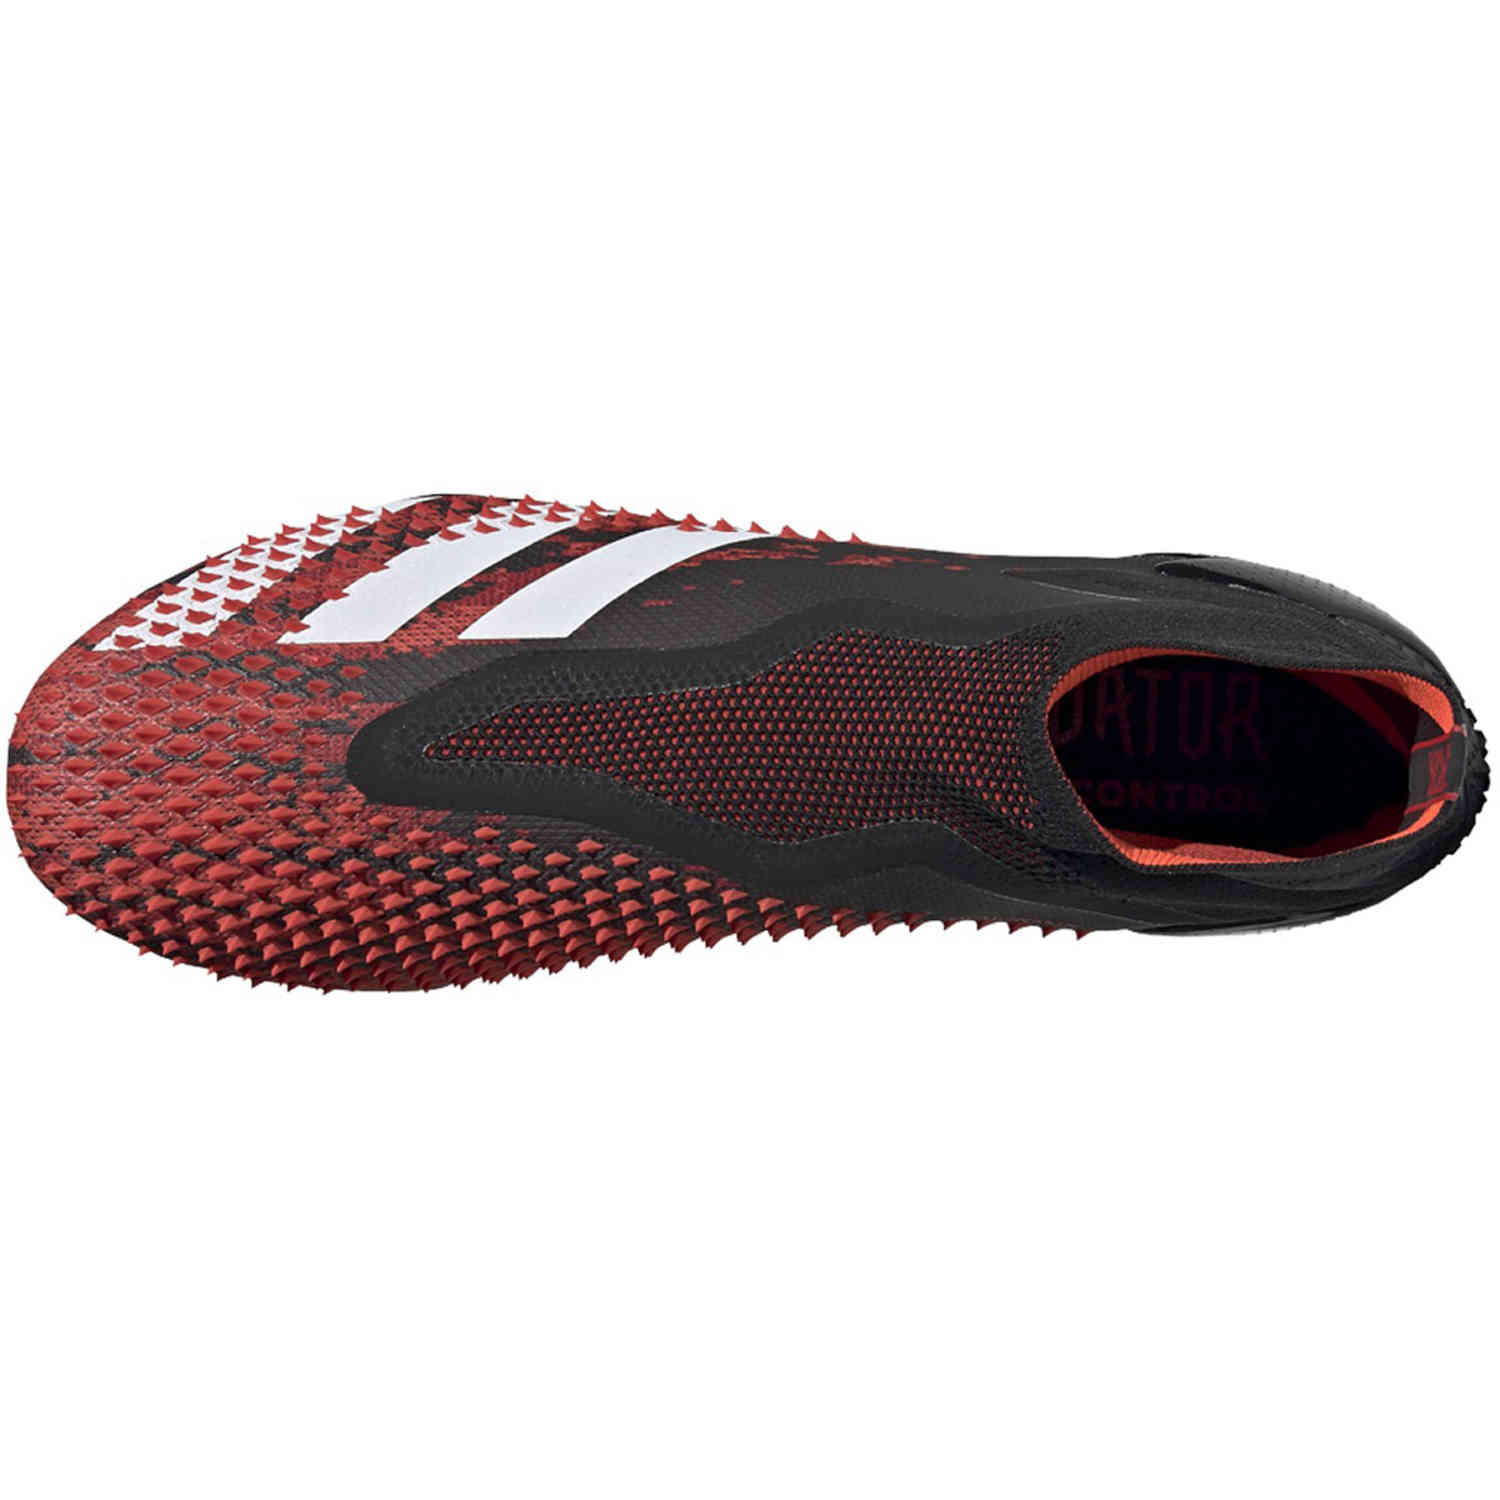 adidas Predator Pro Goalkeeper Gloves Size 10.5 for. eBay